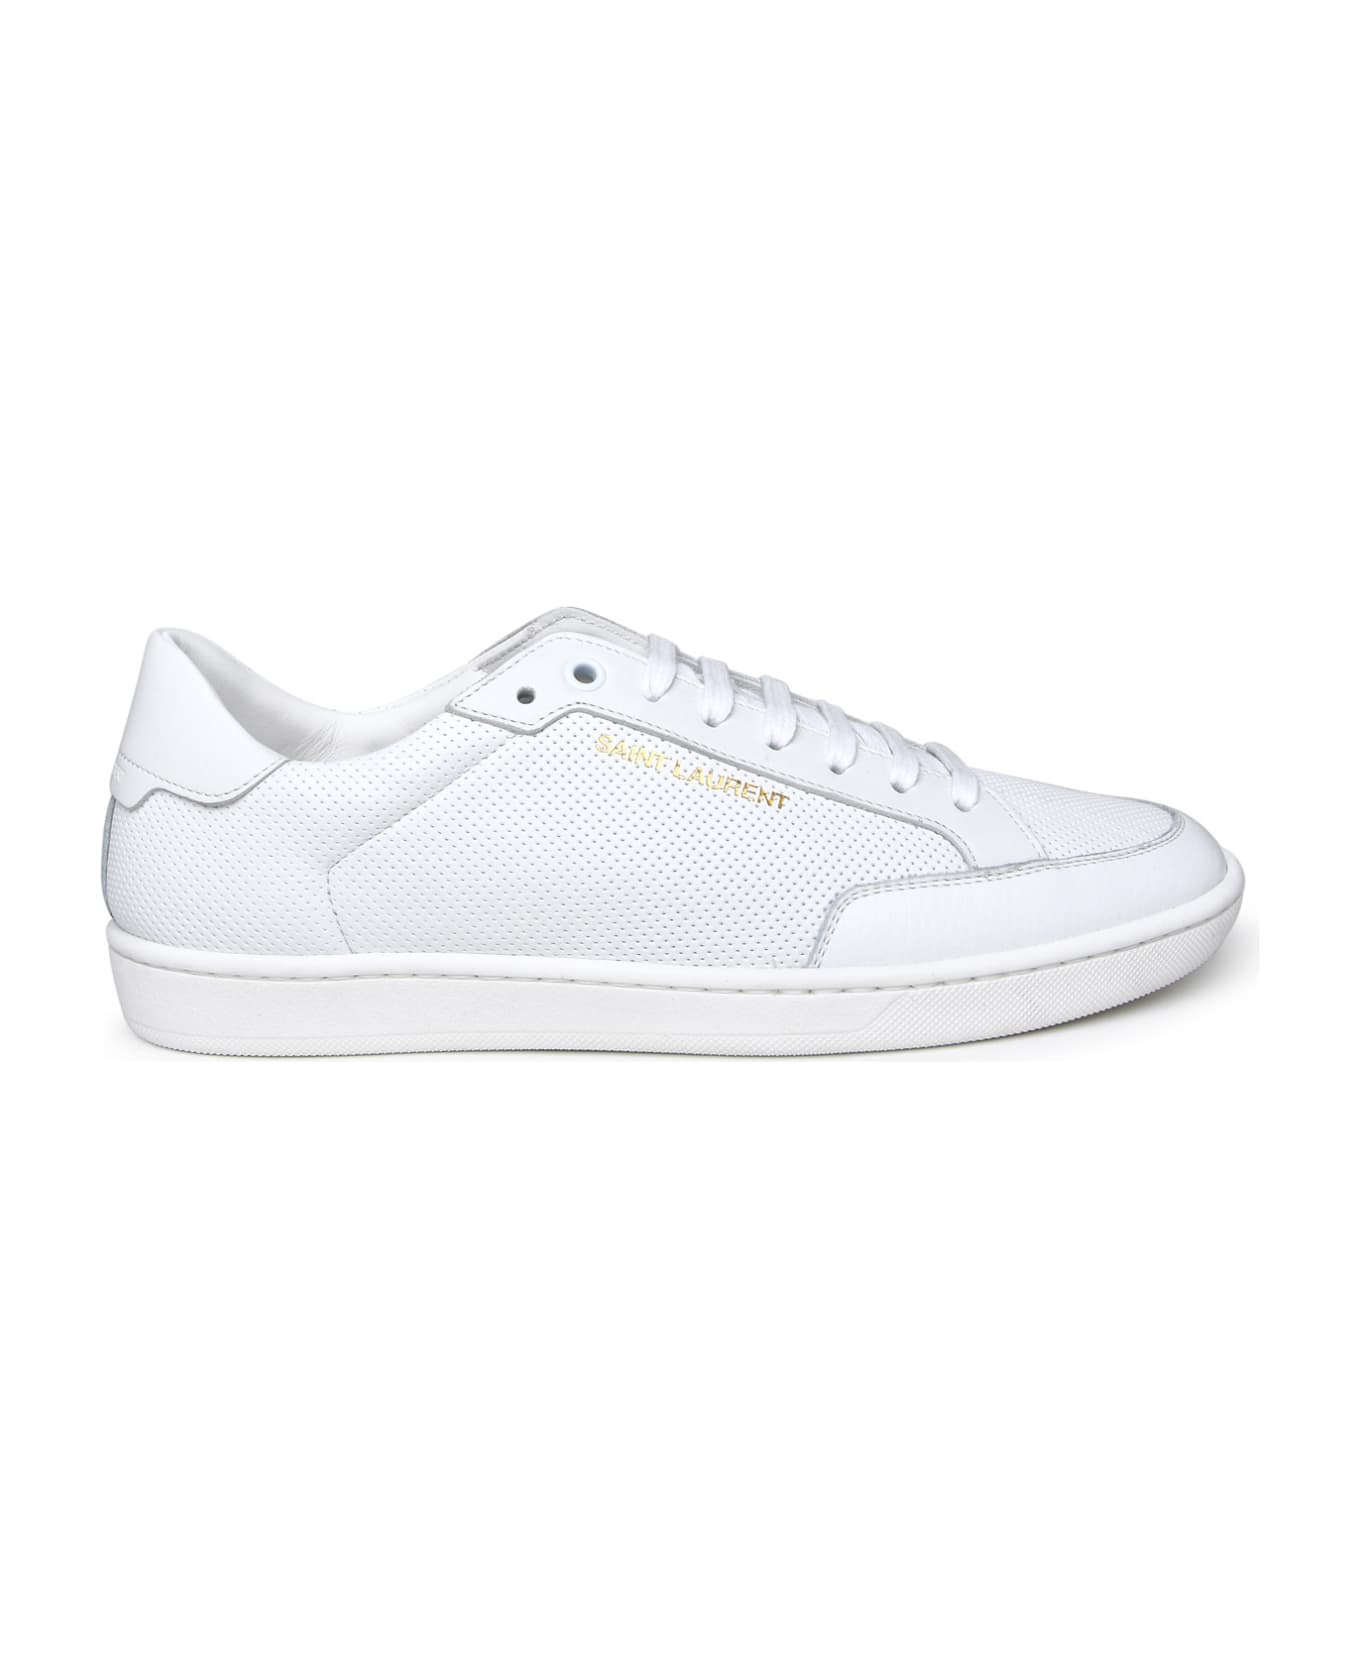 Saint Laurent Sl/10 Low-top Sneakers - White